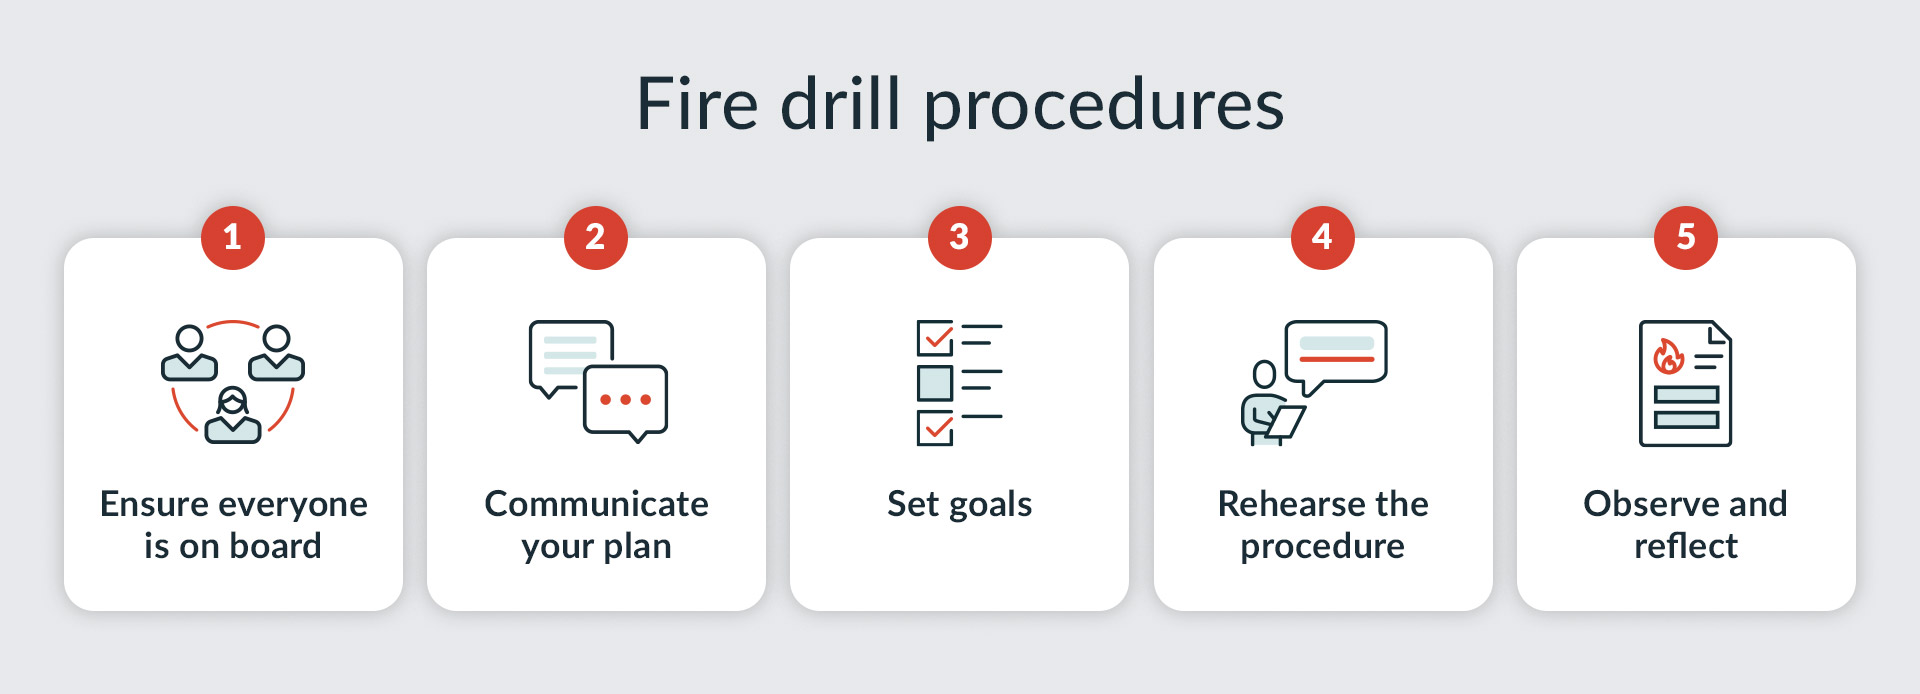 fire drill procedures